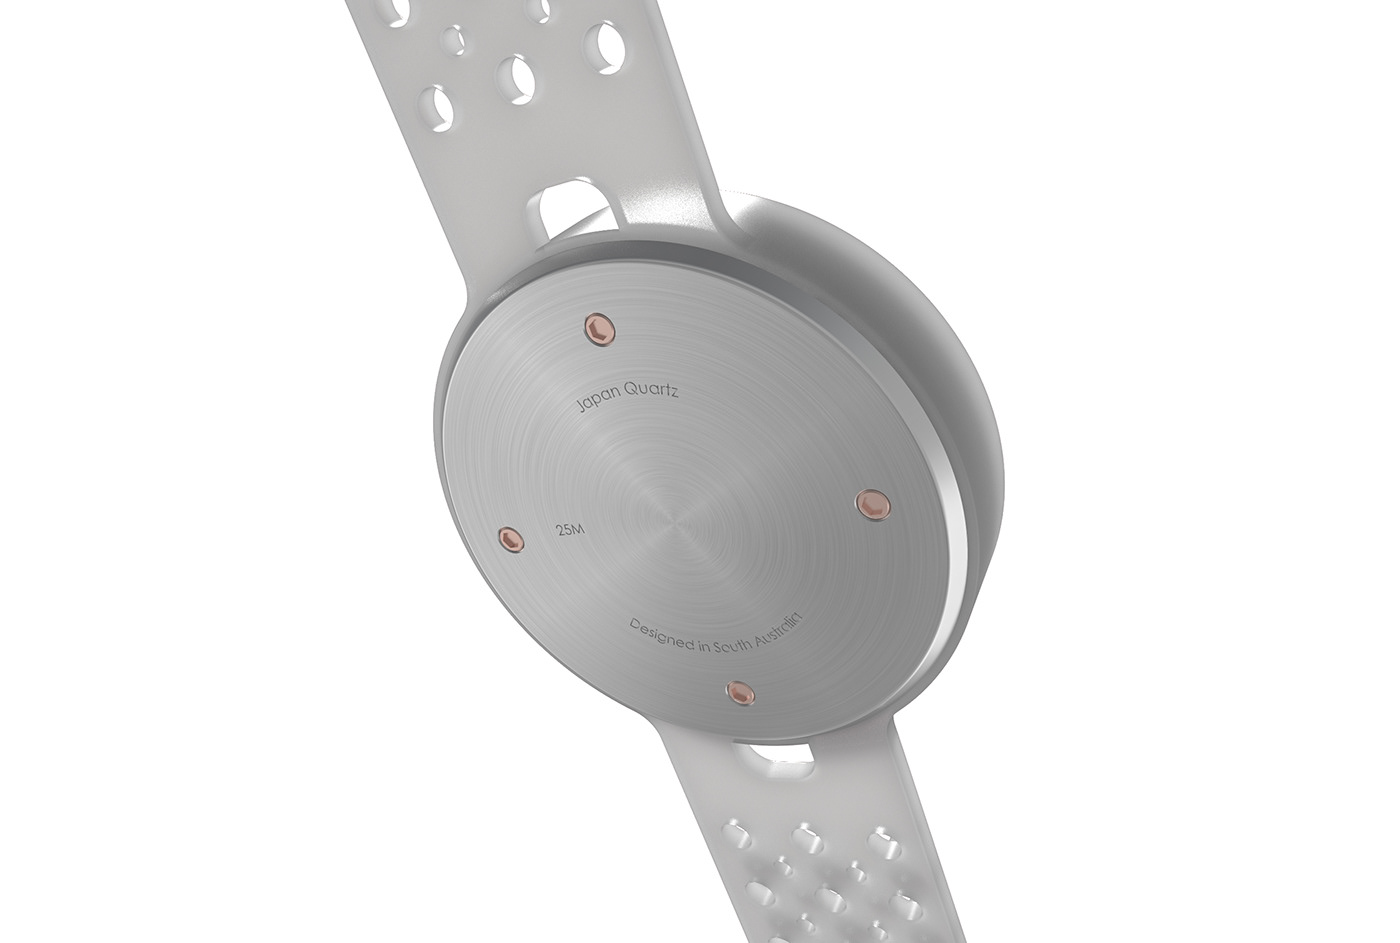 timepiece soft watch vi le industrial design  product design  industrial designer industrialdesignvn thiết kế công nghiệp Thiết kế sản phẩm